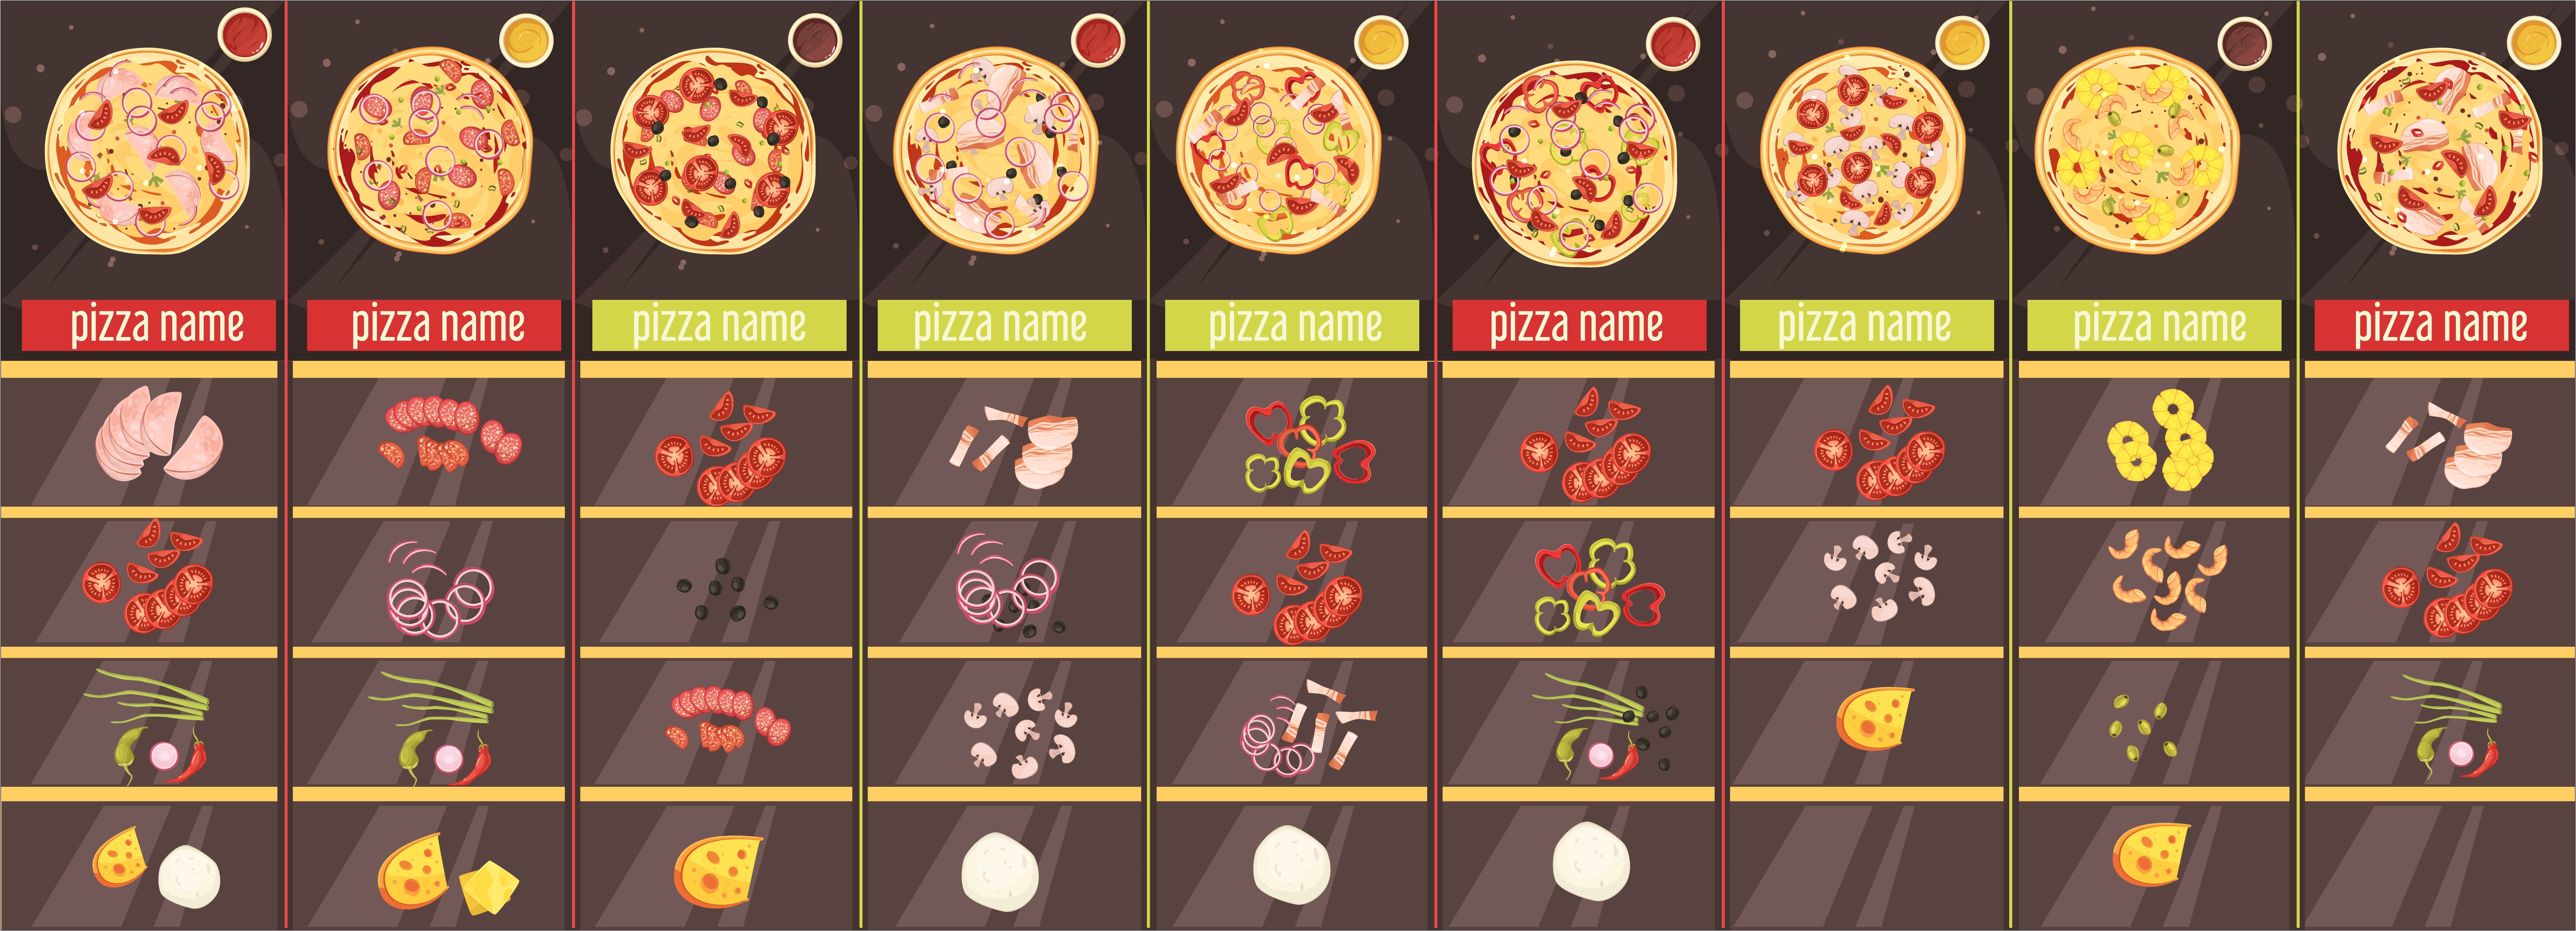 Pizza Menu Template Download Free